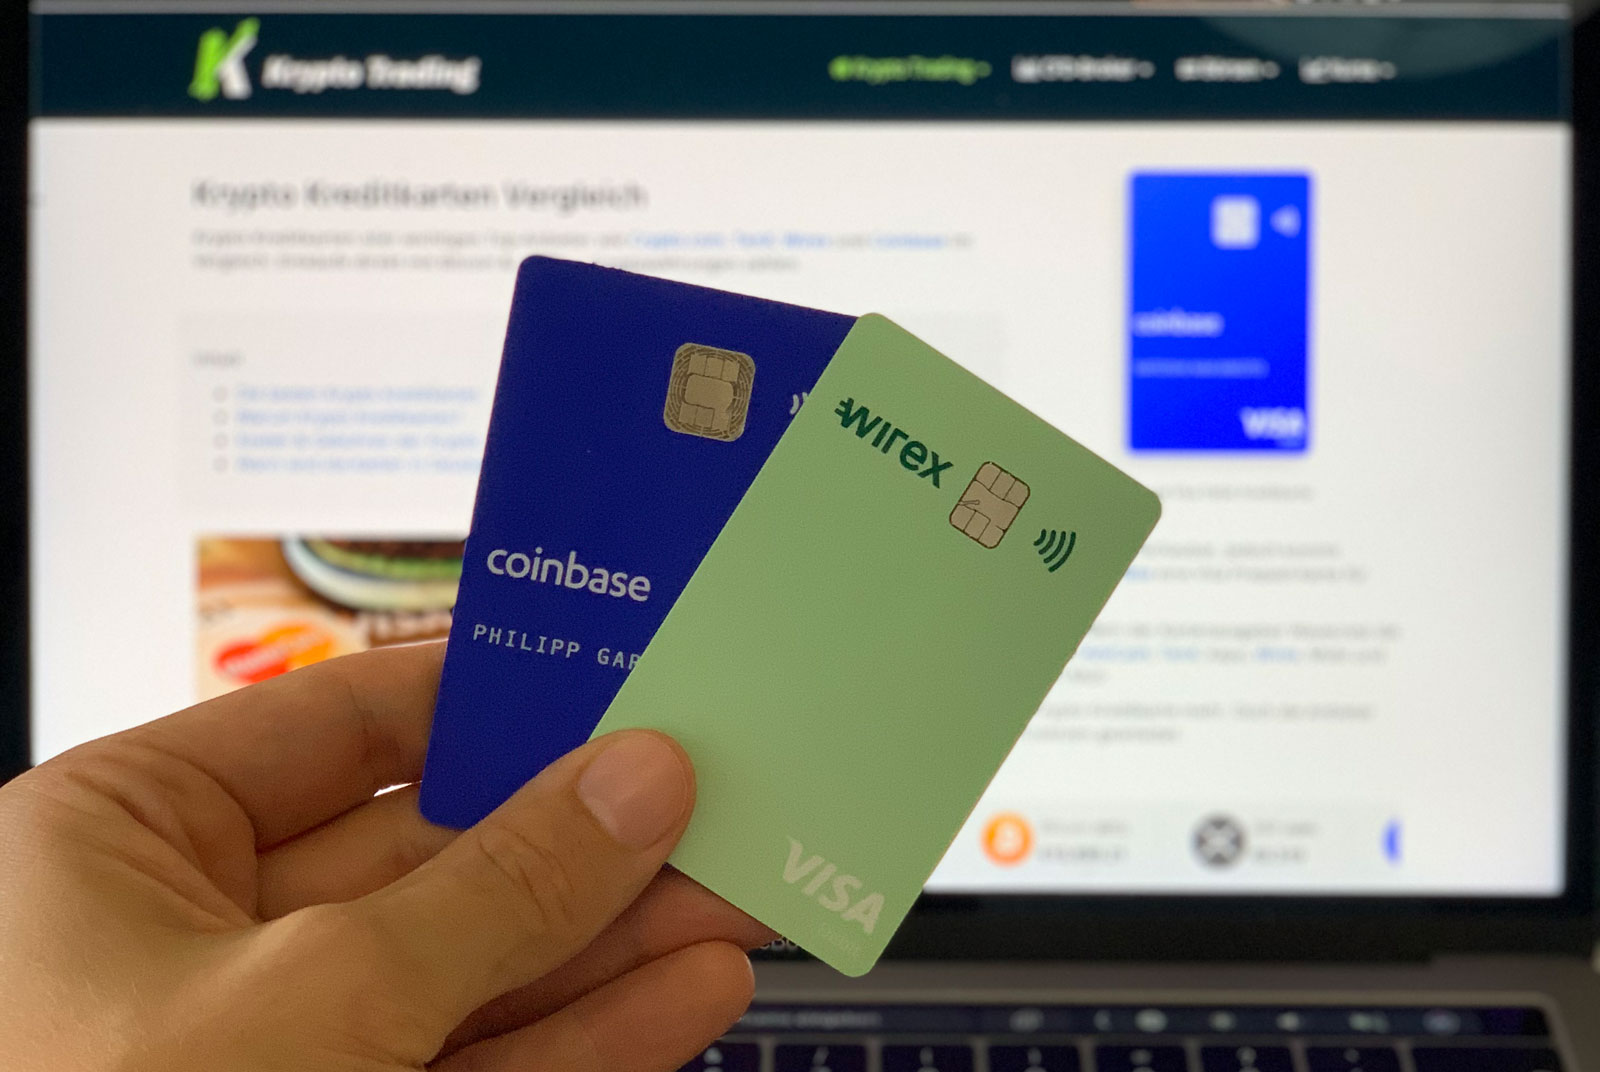 Krypto Kreditkarten Vergleich Bitcoin Kreditkarte | krypto-trading.com